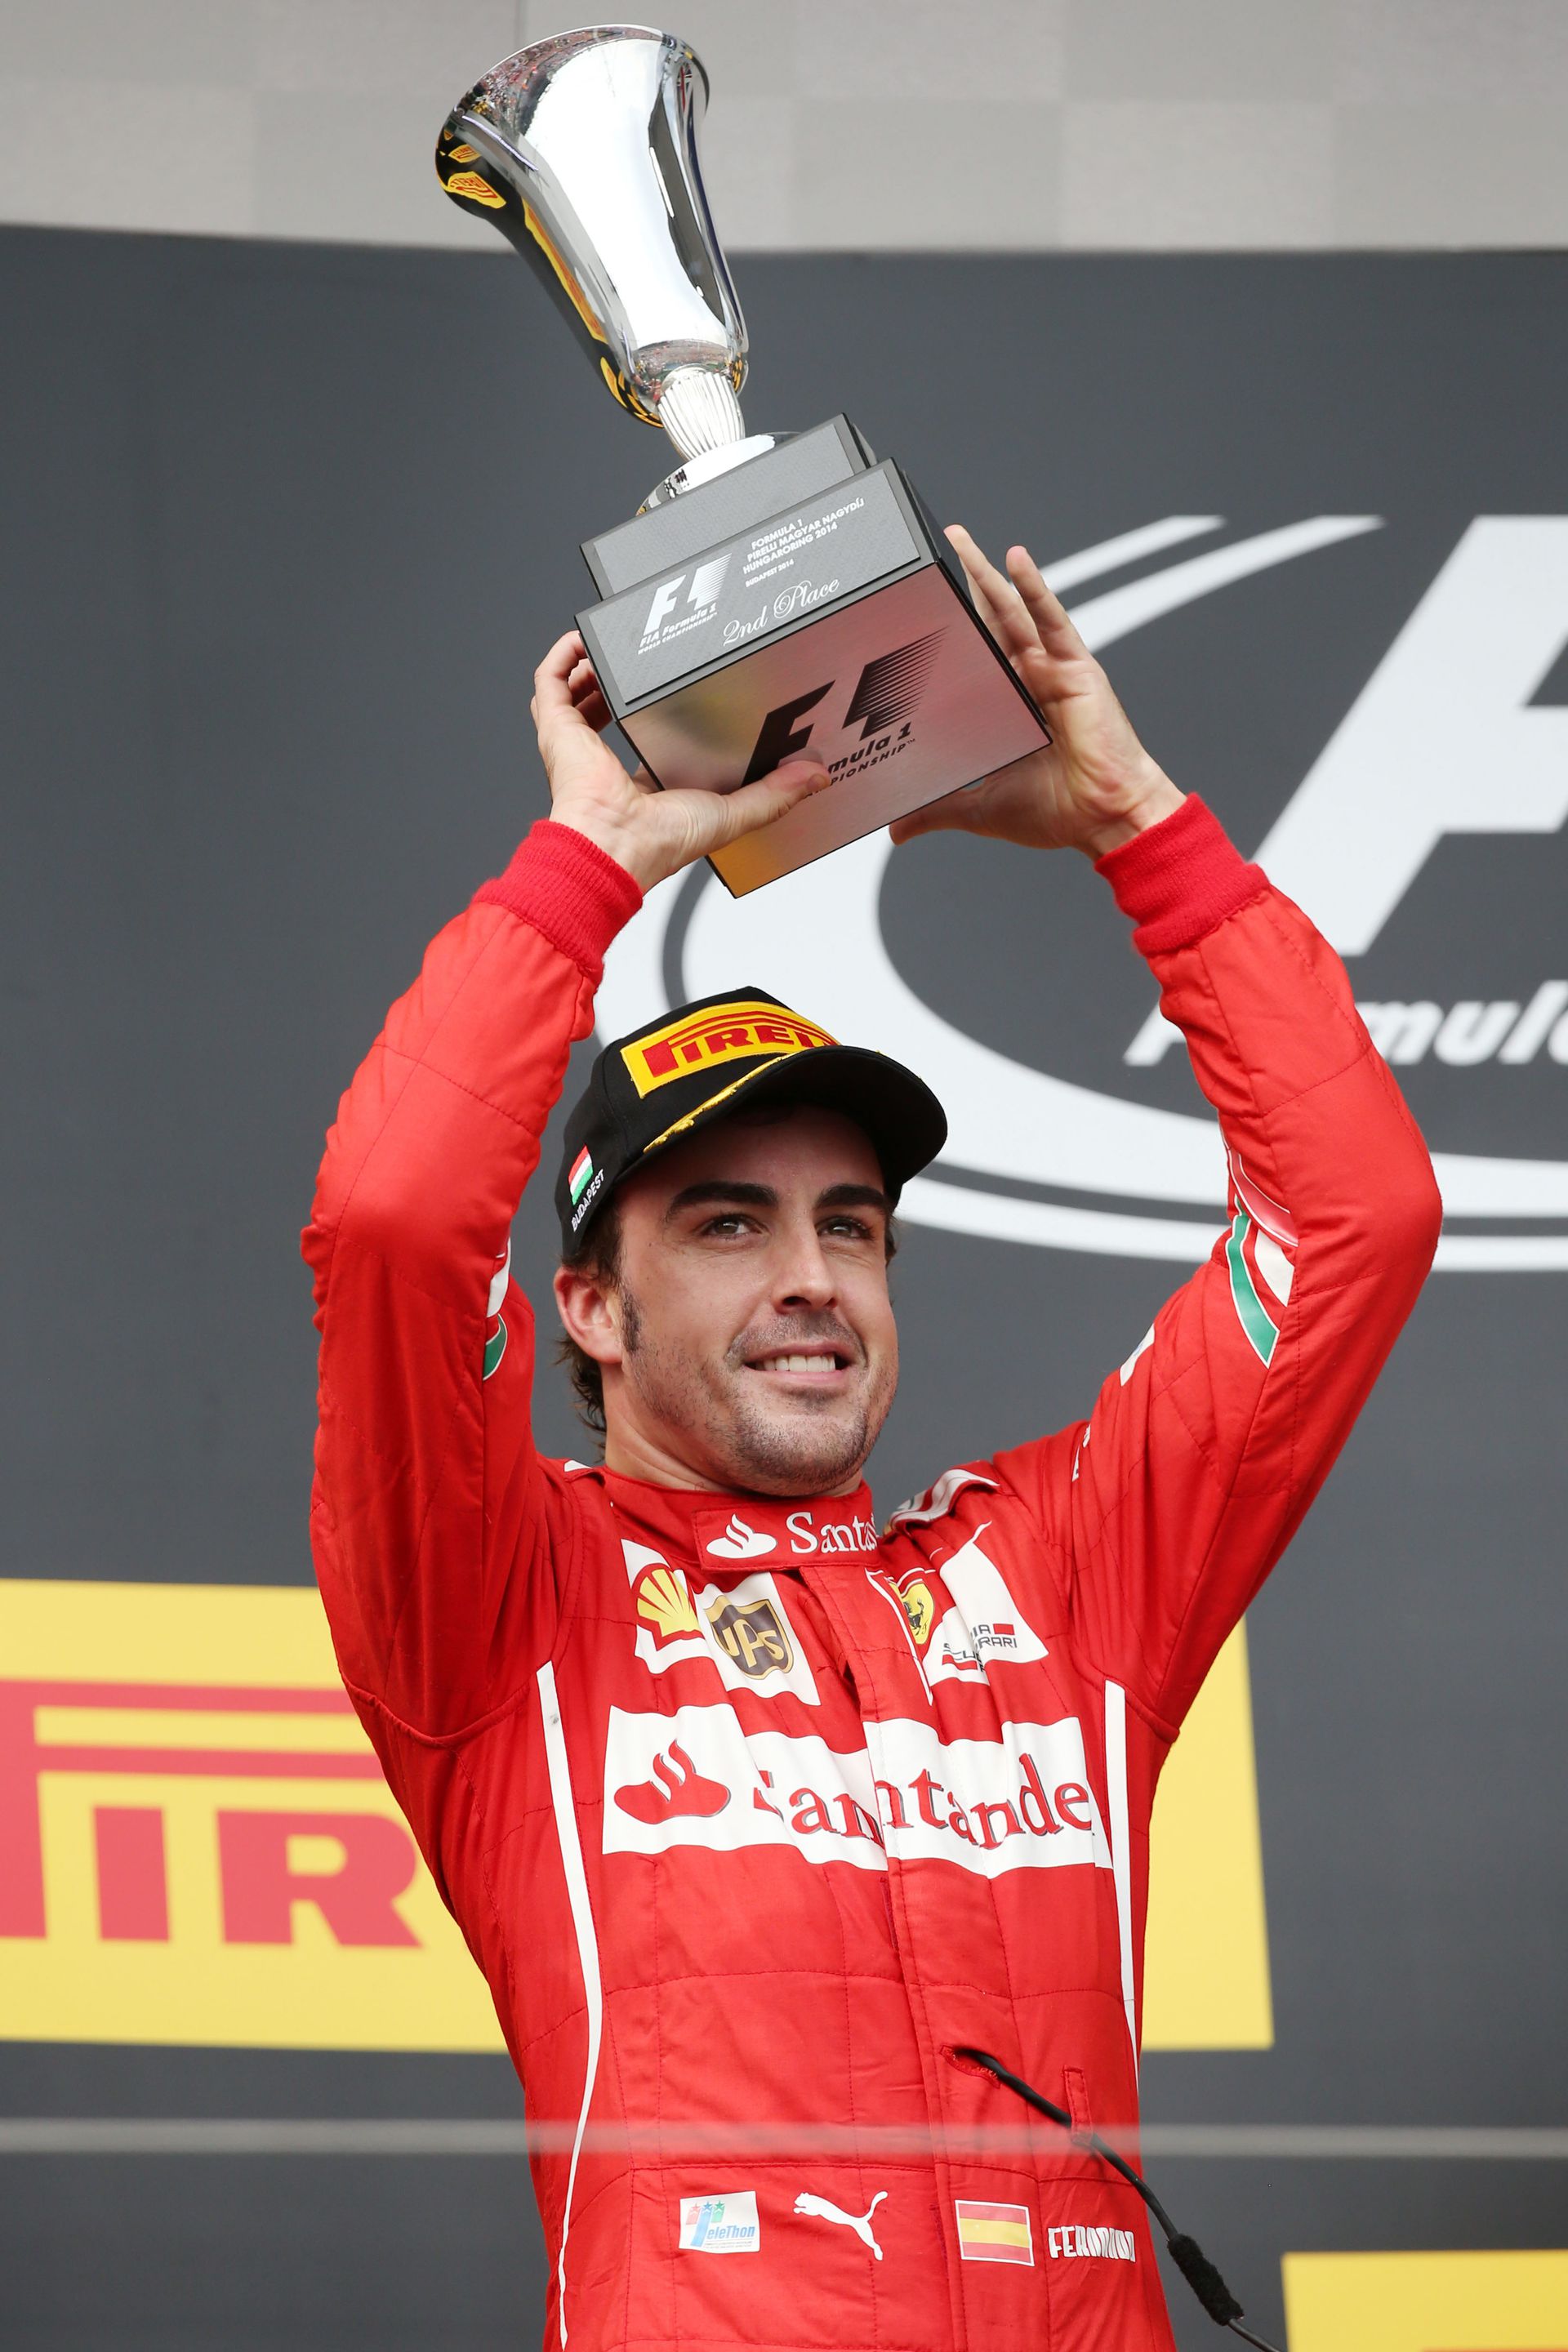 Alonso 20 éve tudott nyerni a Ringen /Fotó: Getty Images